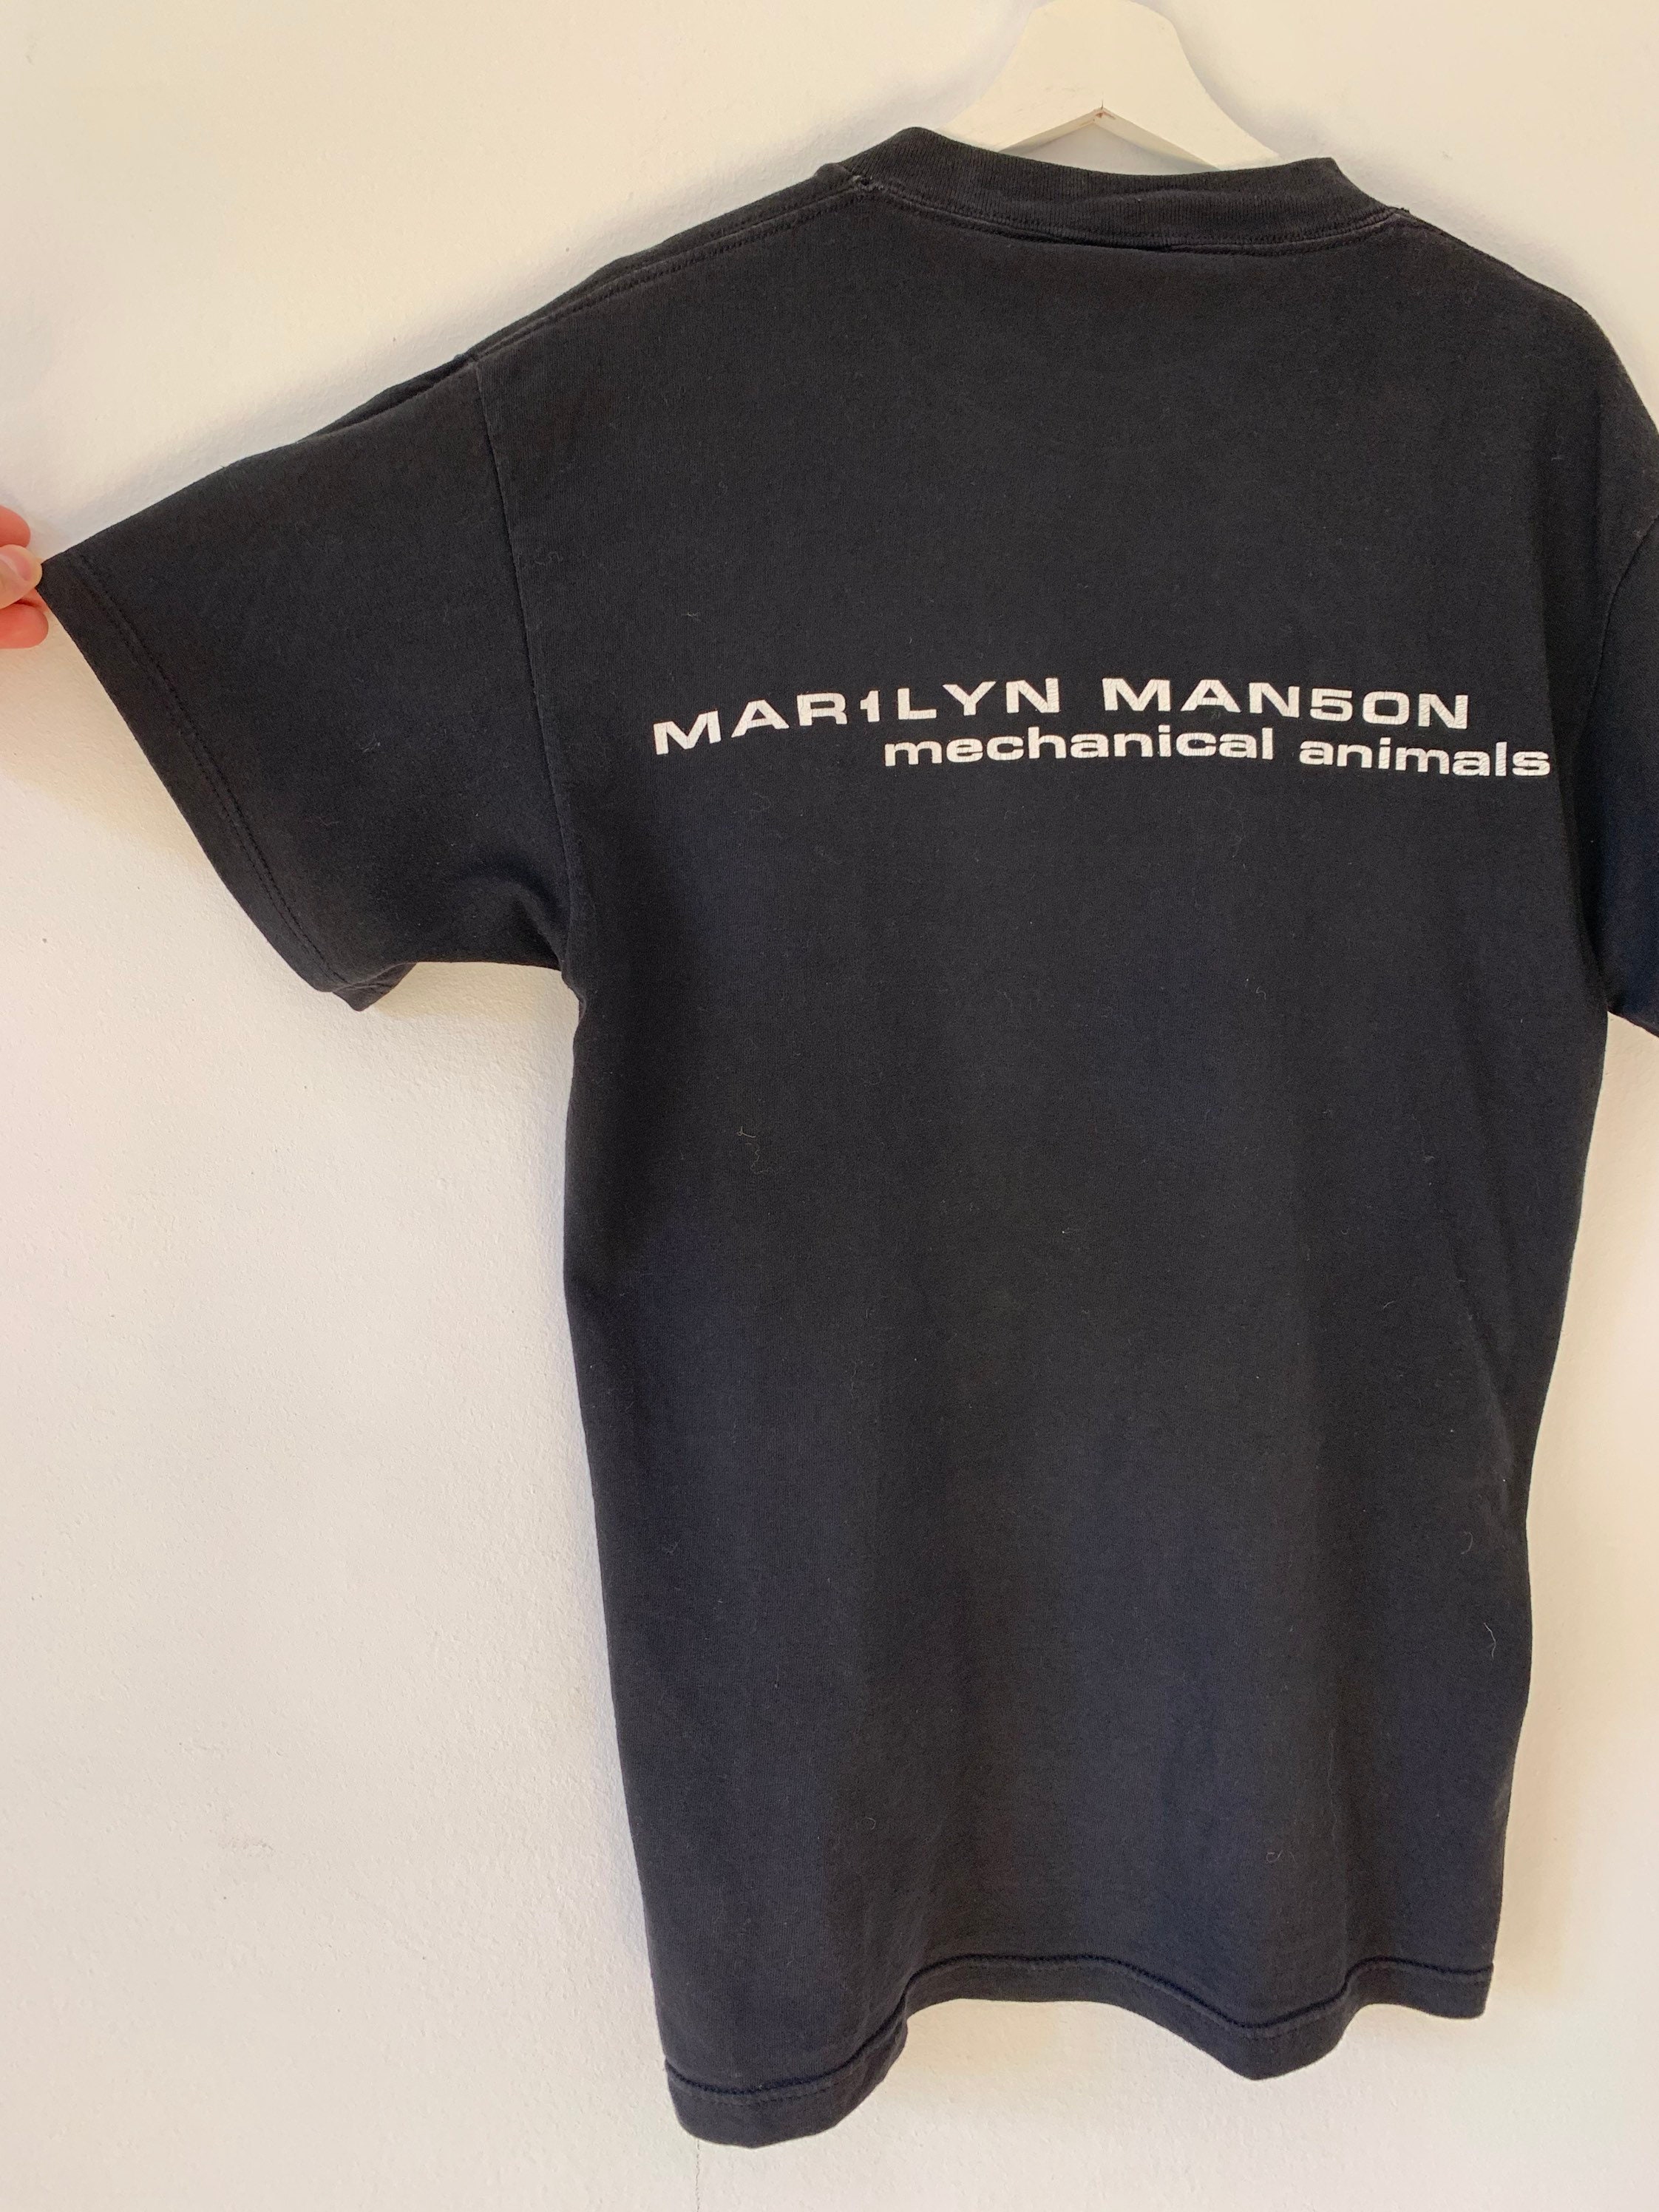 Marilyn Manson vintage t-shirt mechanical animals | Etsy